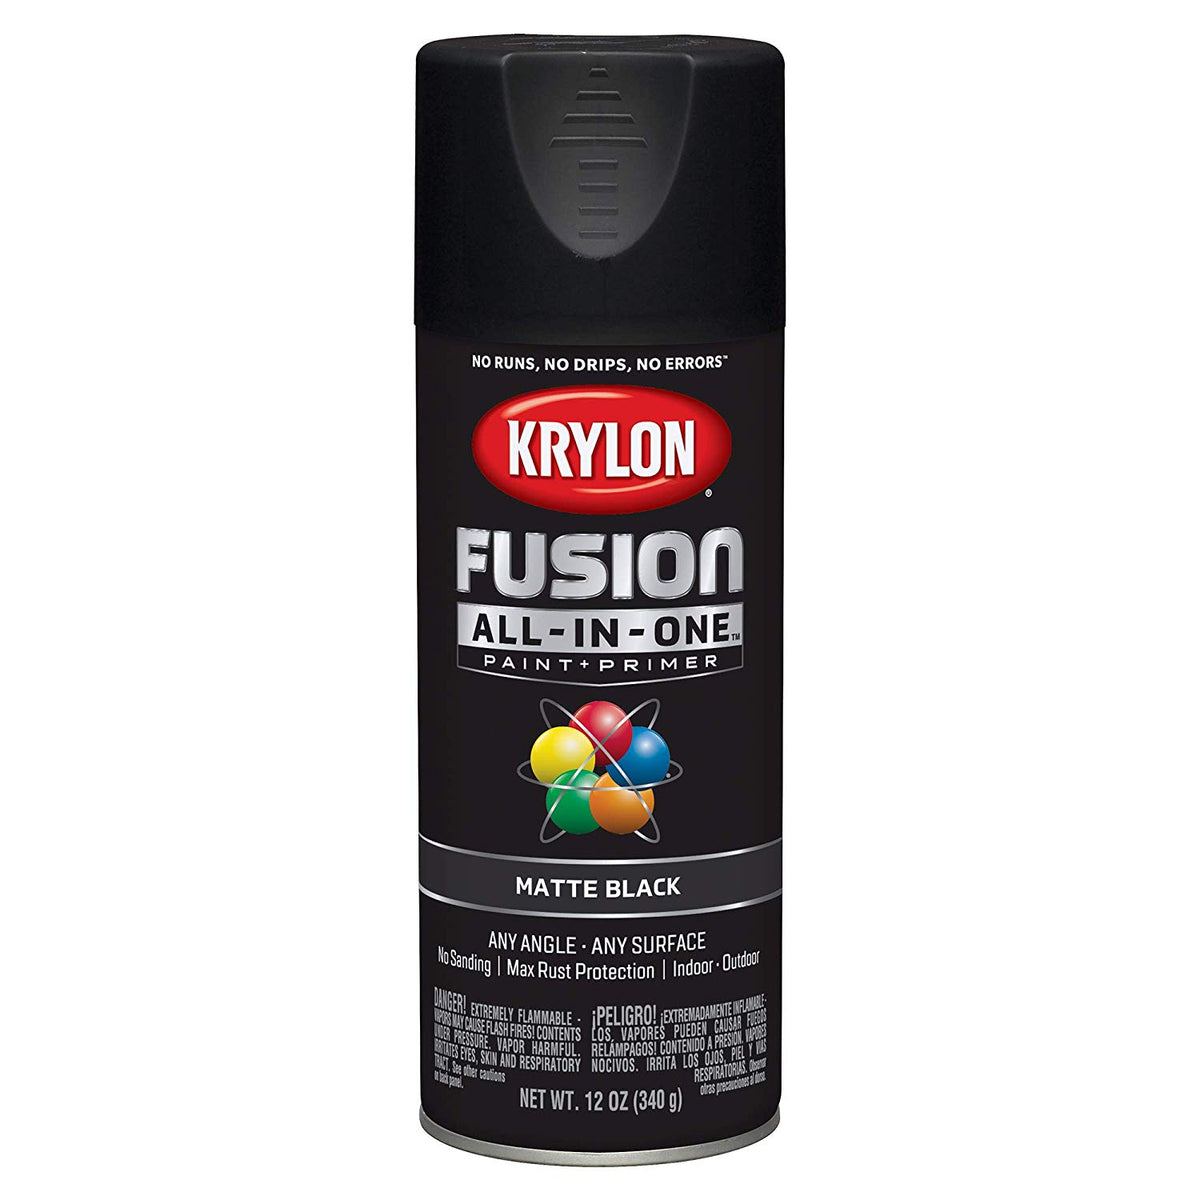 Krylon K02754007 Fusion All-in-One Spray Paint + Primer, Matte Black, 12 Oz